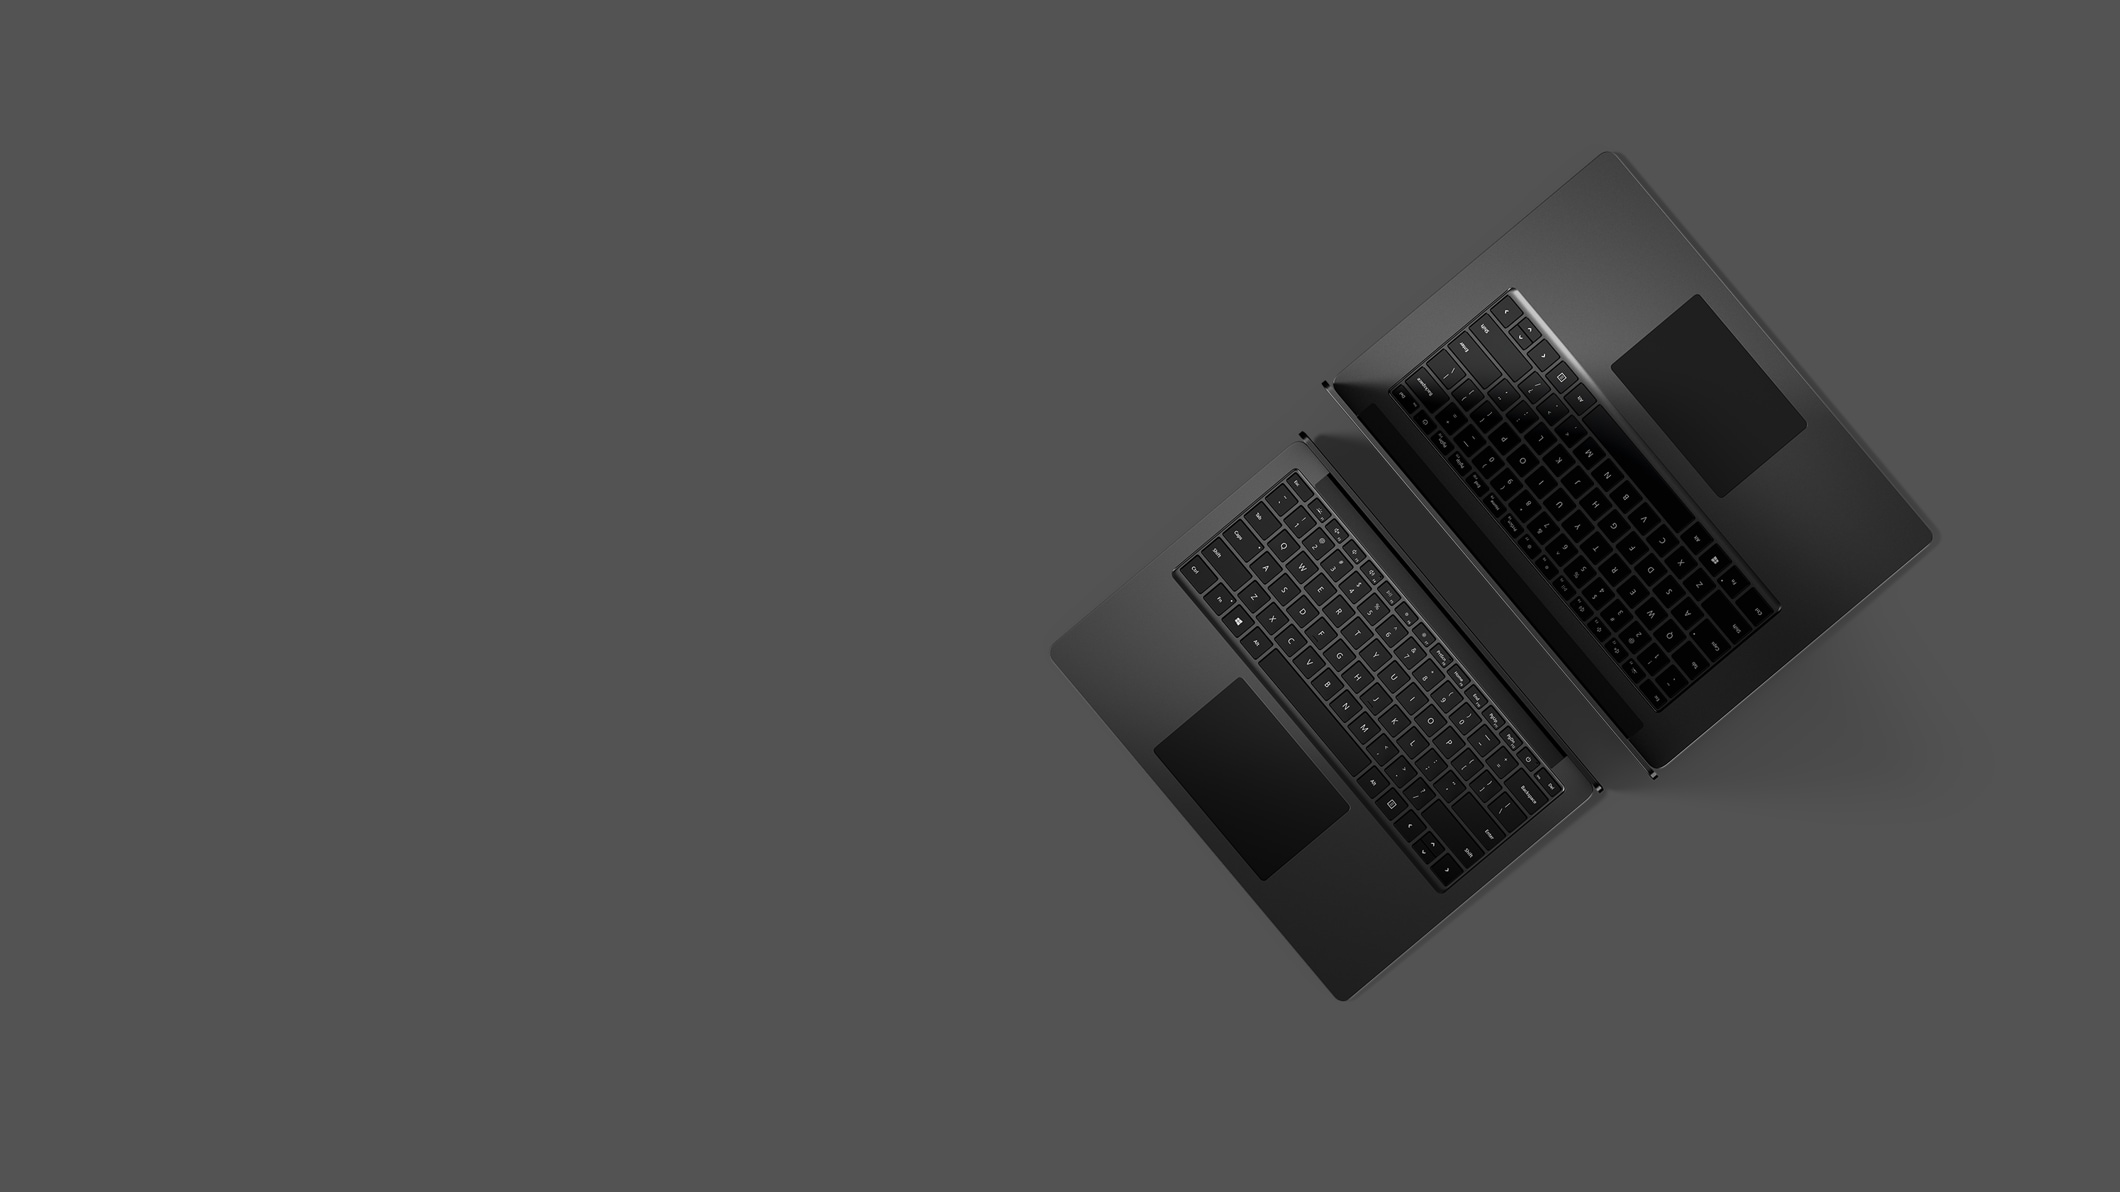 Surface Laptop 4 for Business in Mattschwarz.